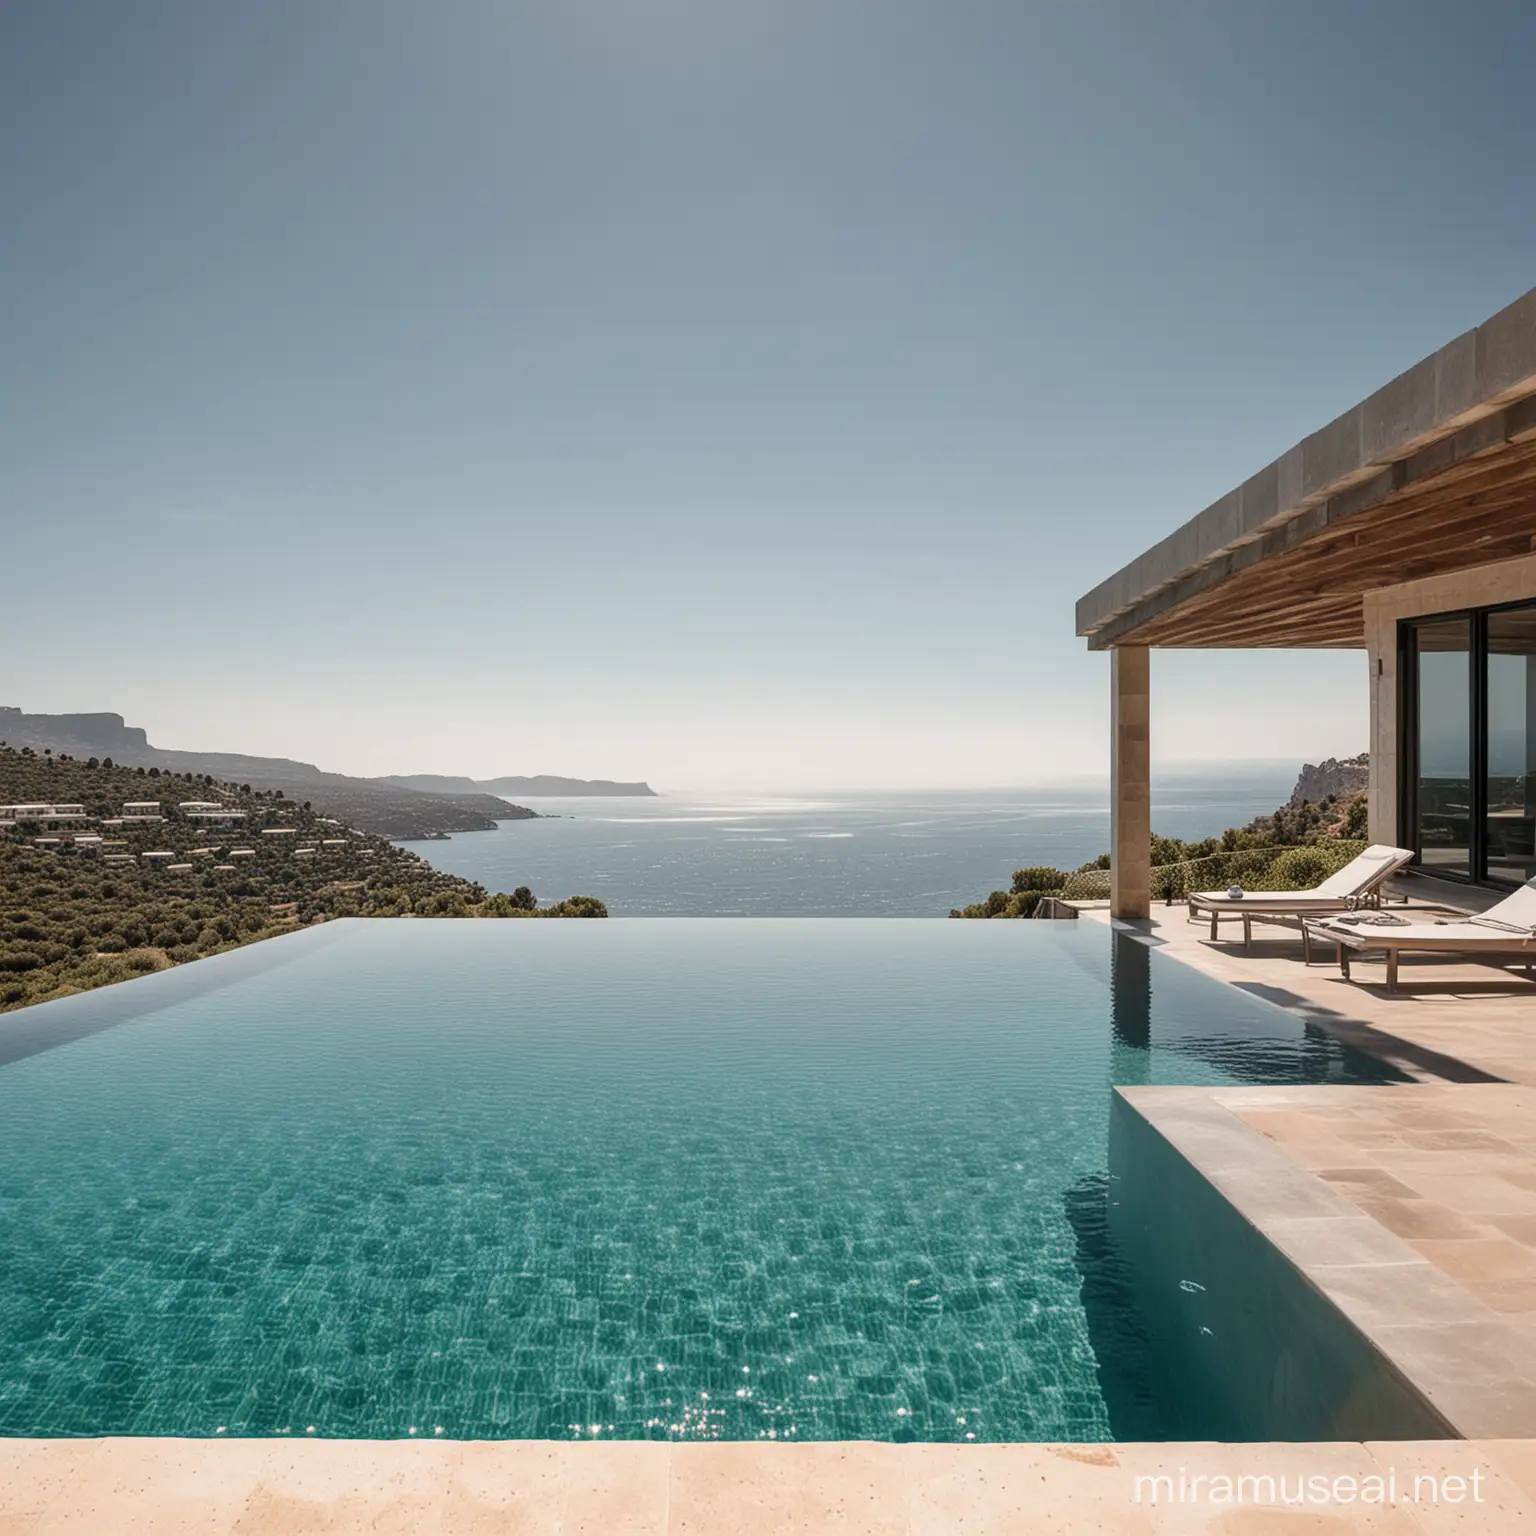 Luxurious Infinity Pool with Stunning Sea Views at Modern Villa in Mallorca